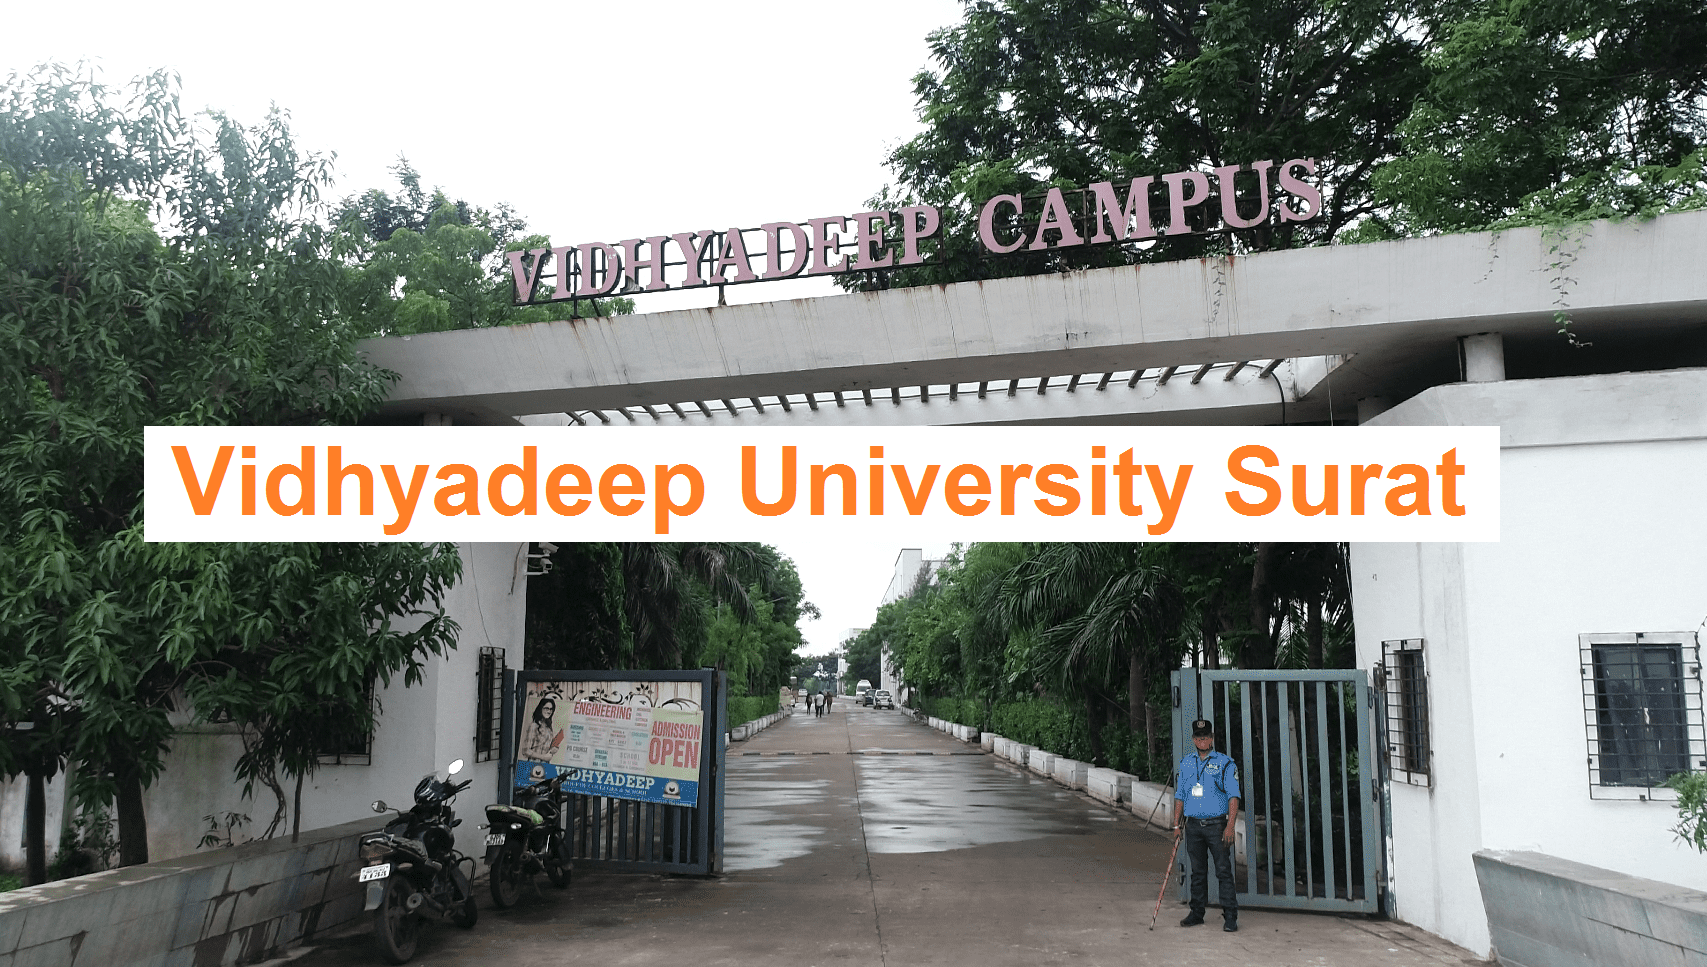 Vidhyadeep University Surat